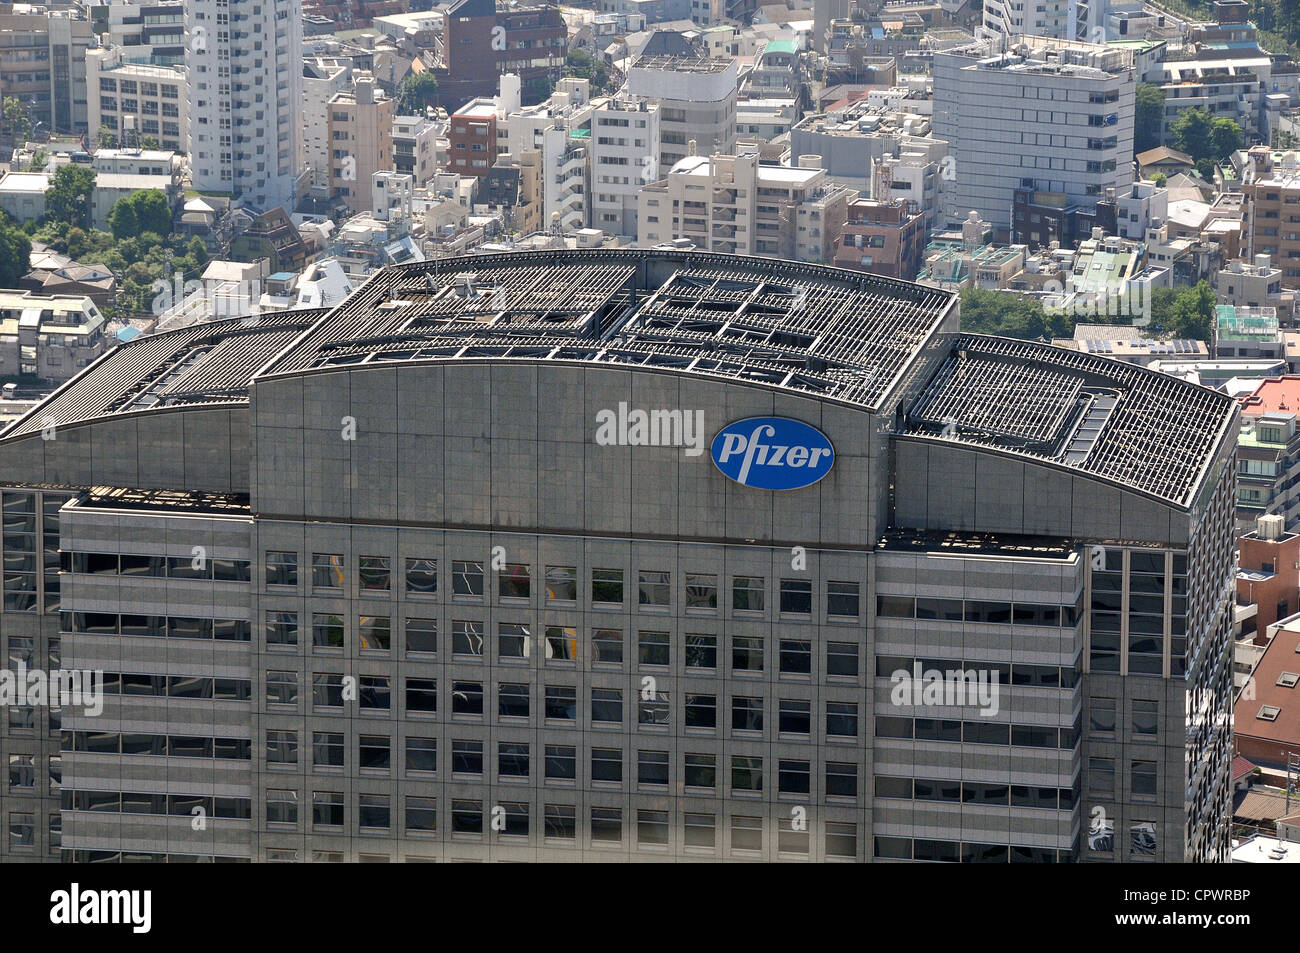 Pfizer Japan headquarter building Shinjuku Tokyo Japan Stock Photo